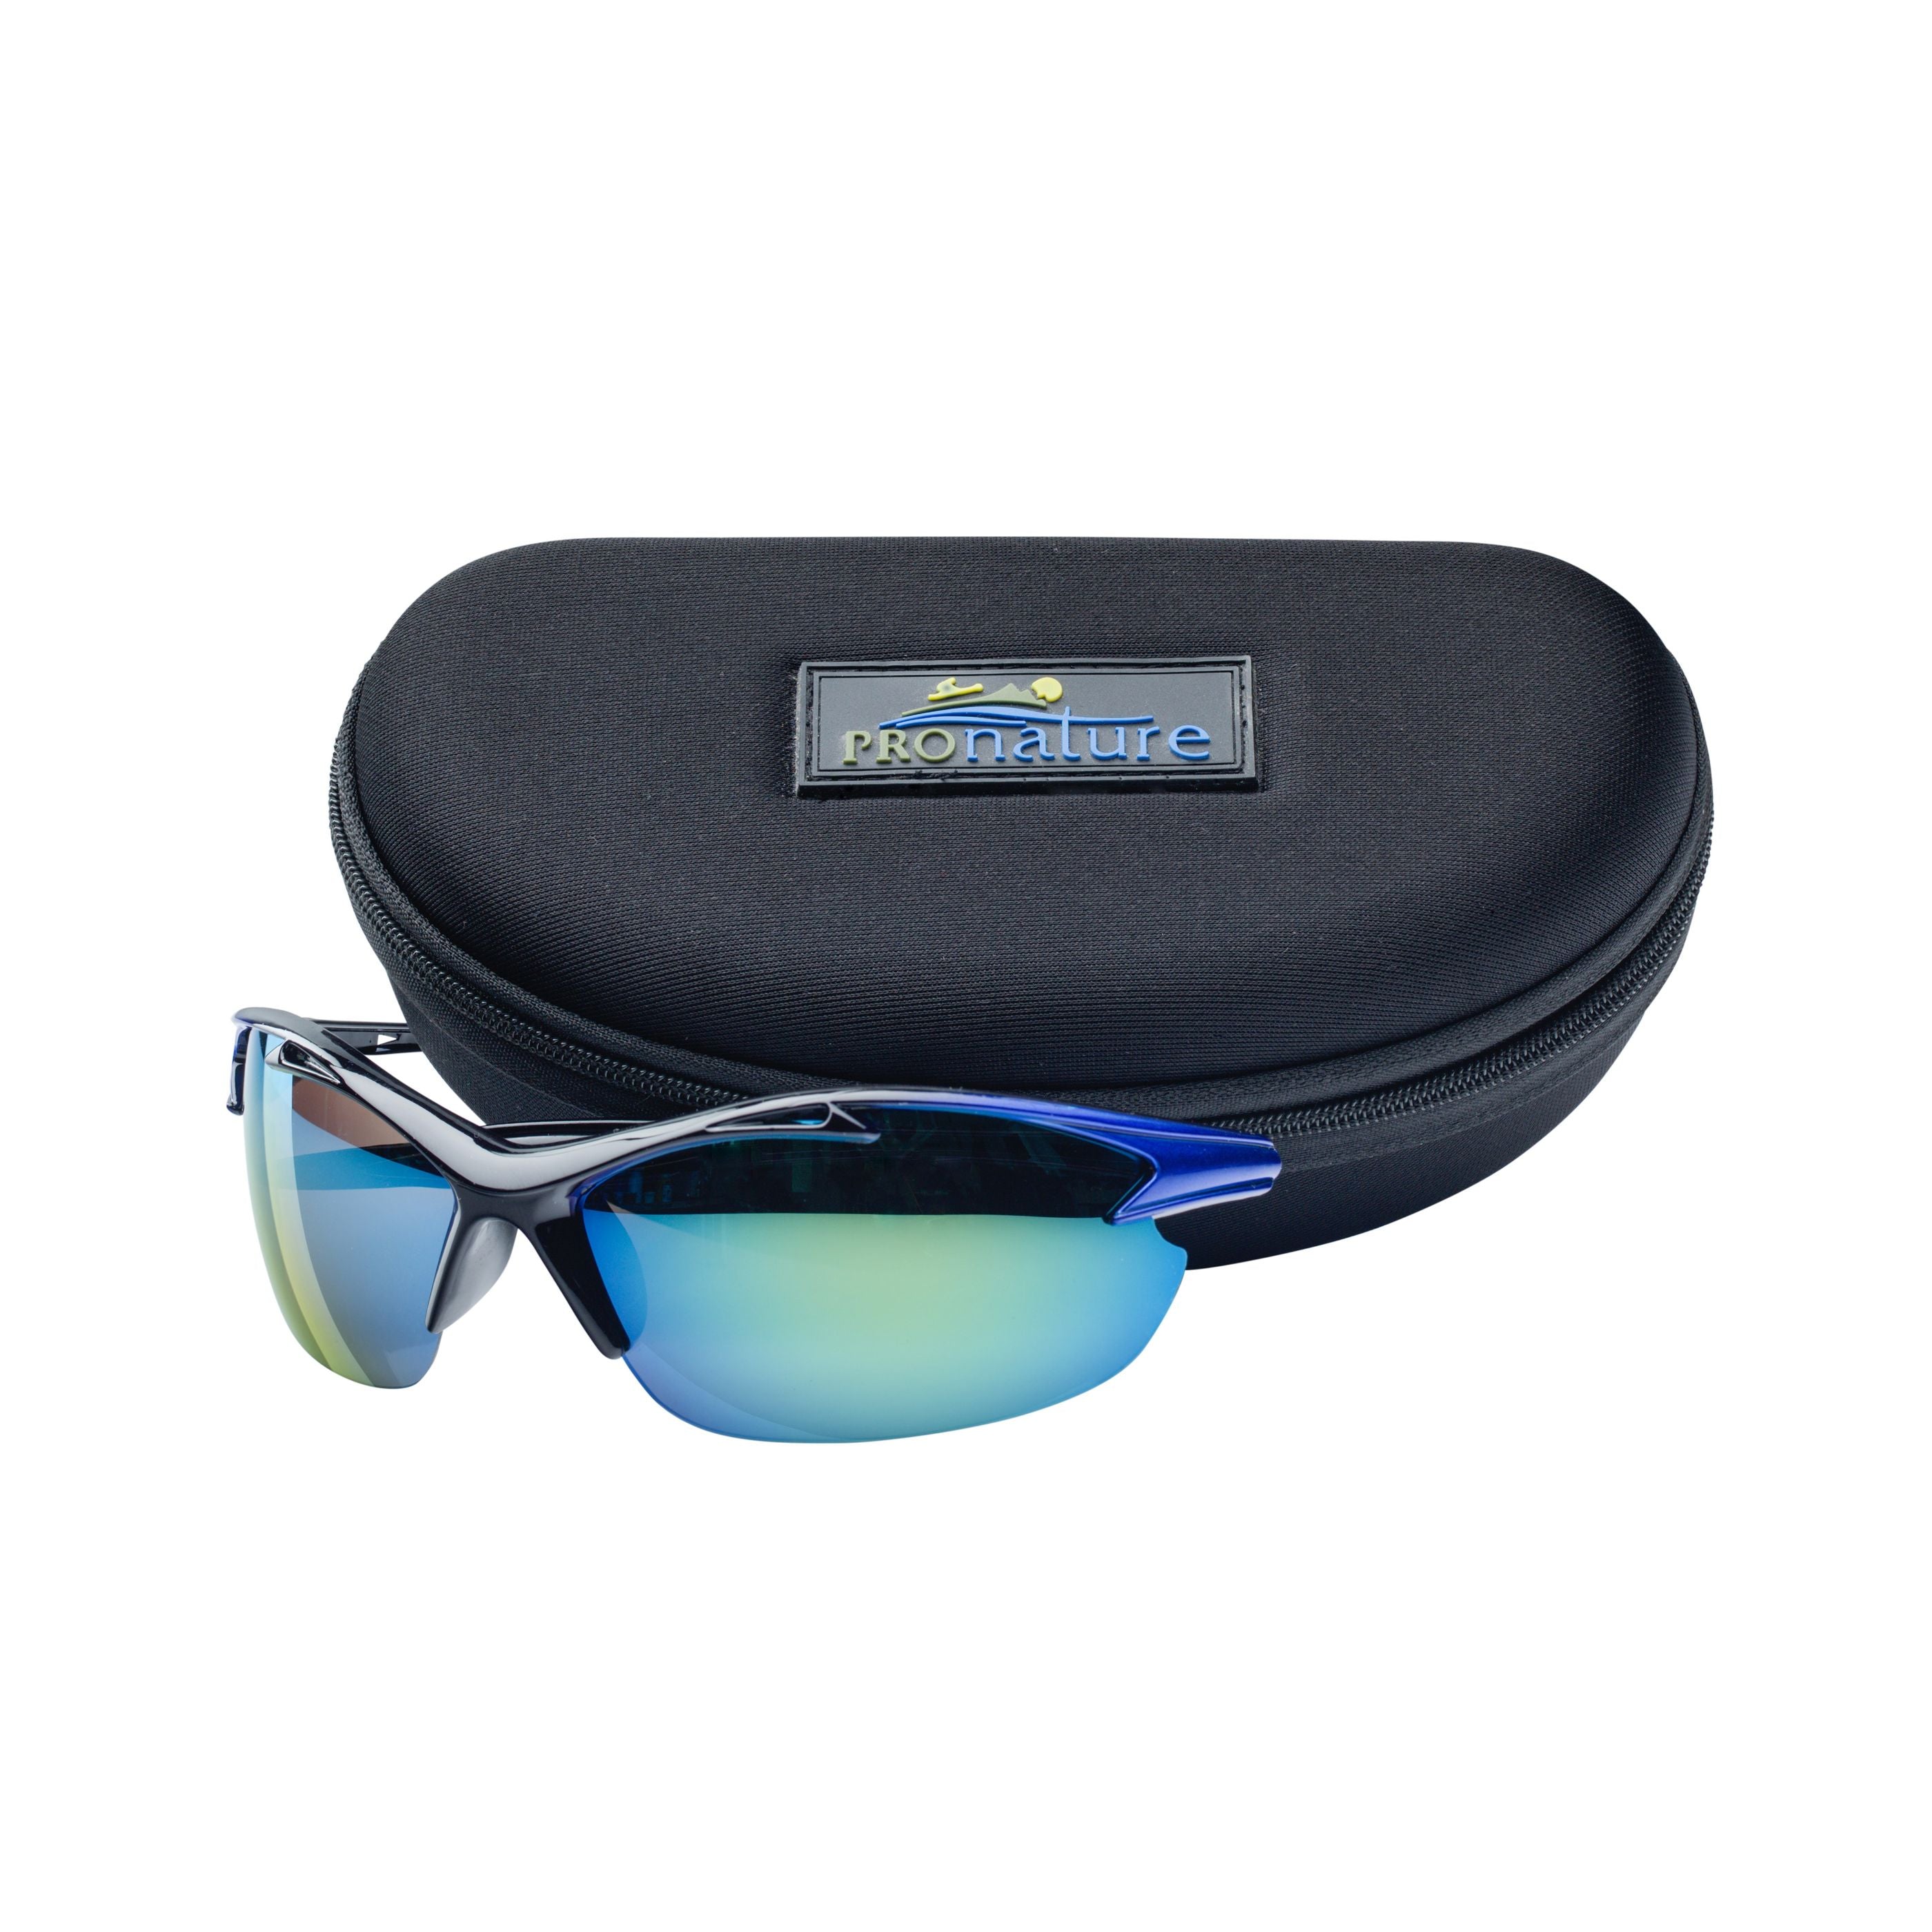 "Blue flash" polarized sunglasses